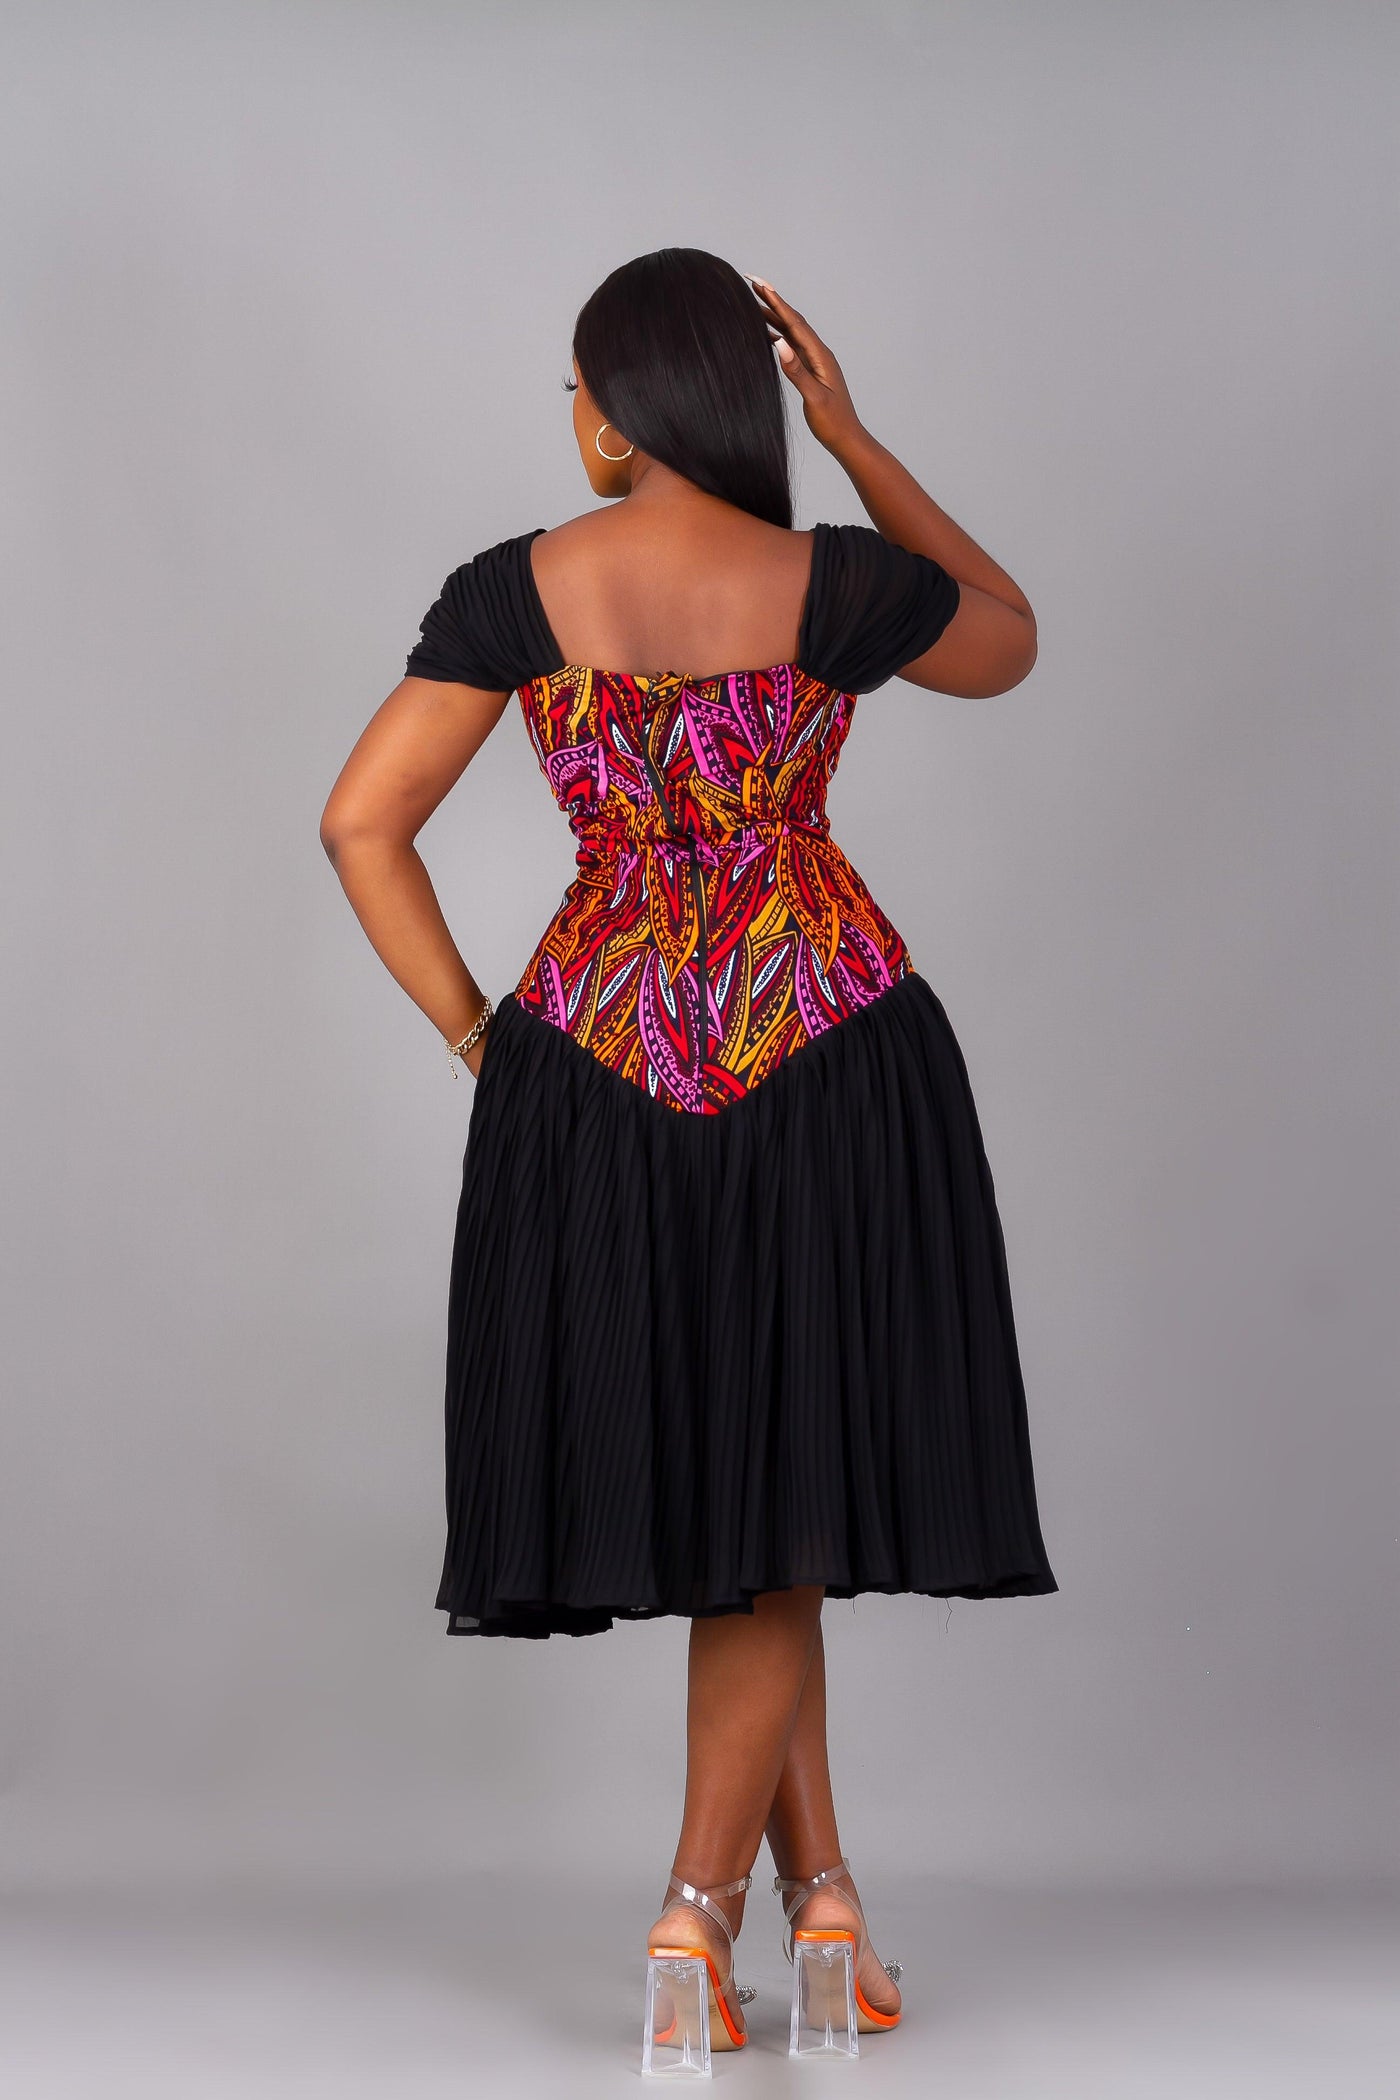 CHIKA AFRICAN PRINT DRESS - AmazinApparels